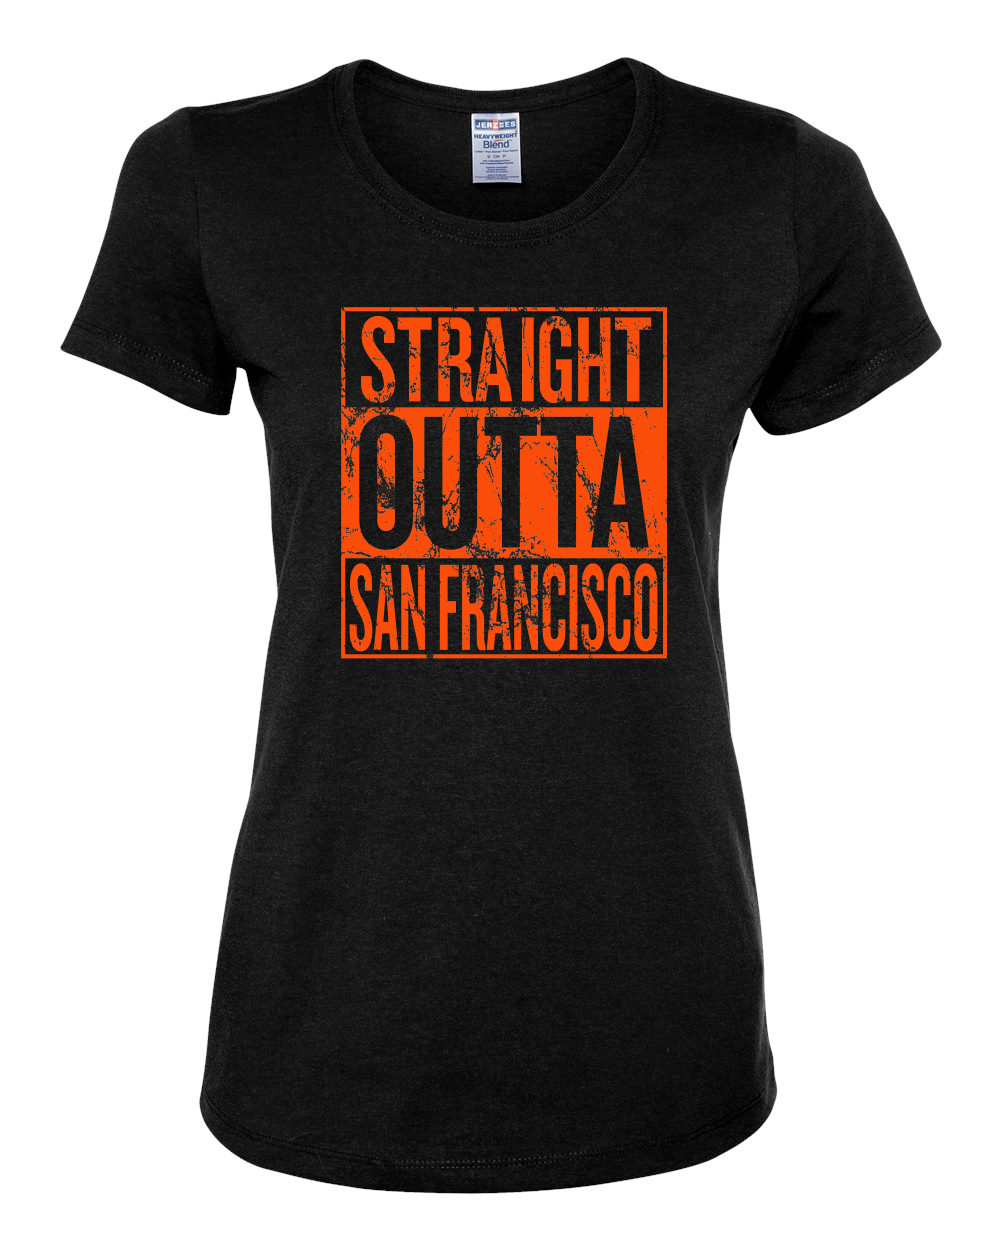 Straight Outta San Francisco SF Fan | Fantasy Baseball Fans | Womens Sports Graphic T-Shirt, Black, Medium - image 1 of 4